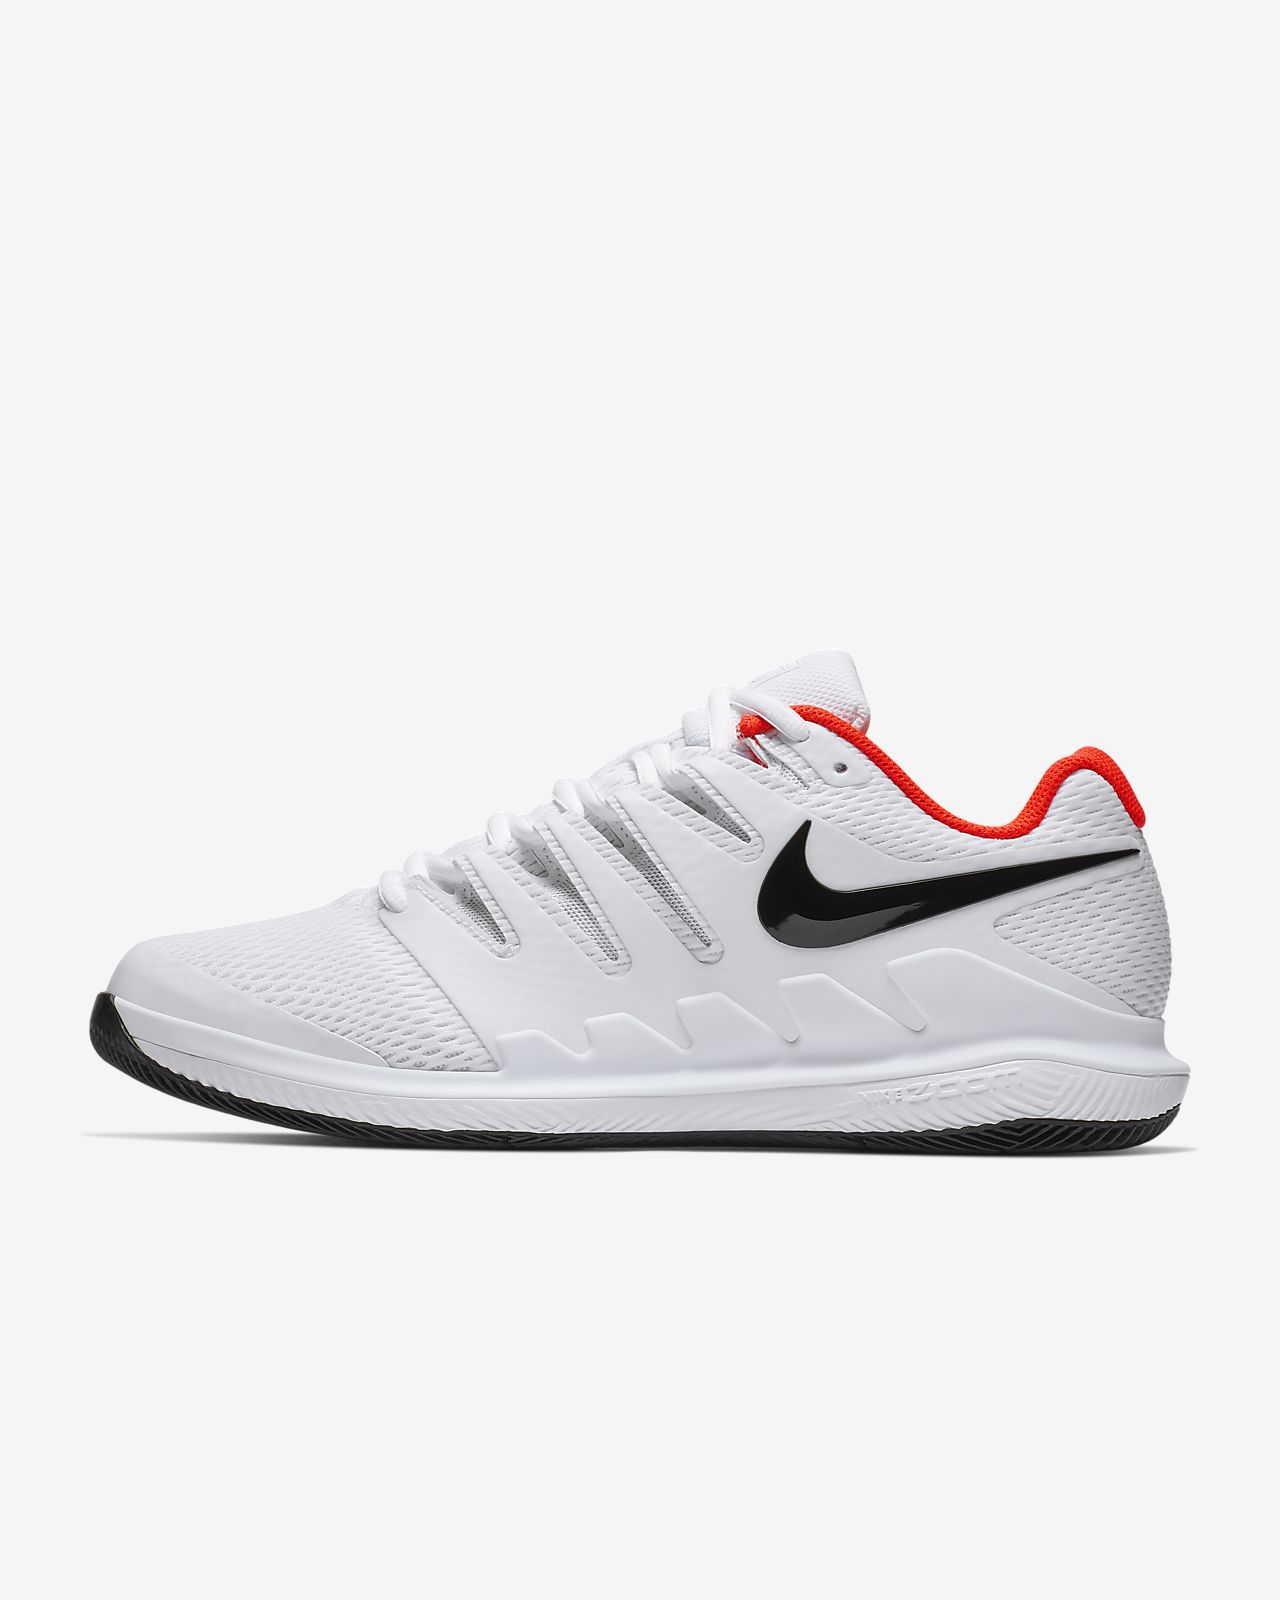 Hard Court Tennis Shoe. Nike BG